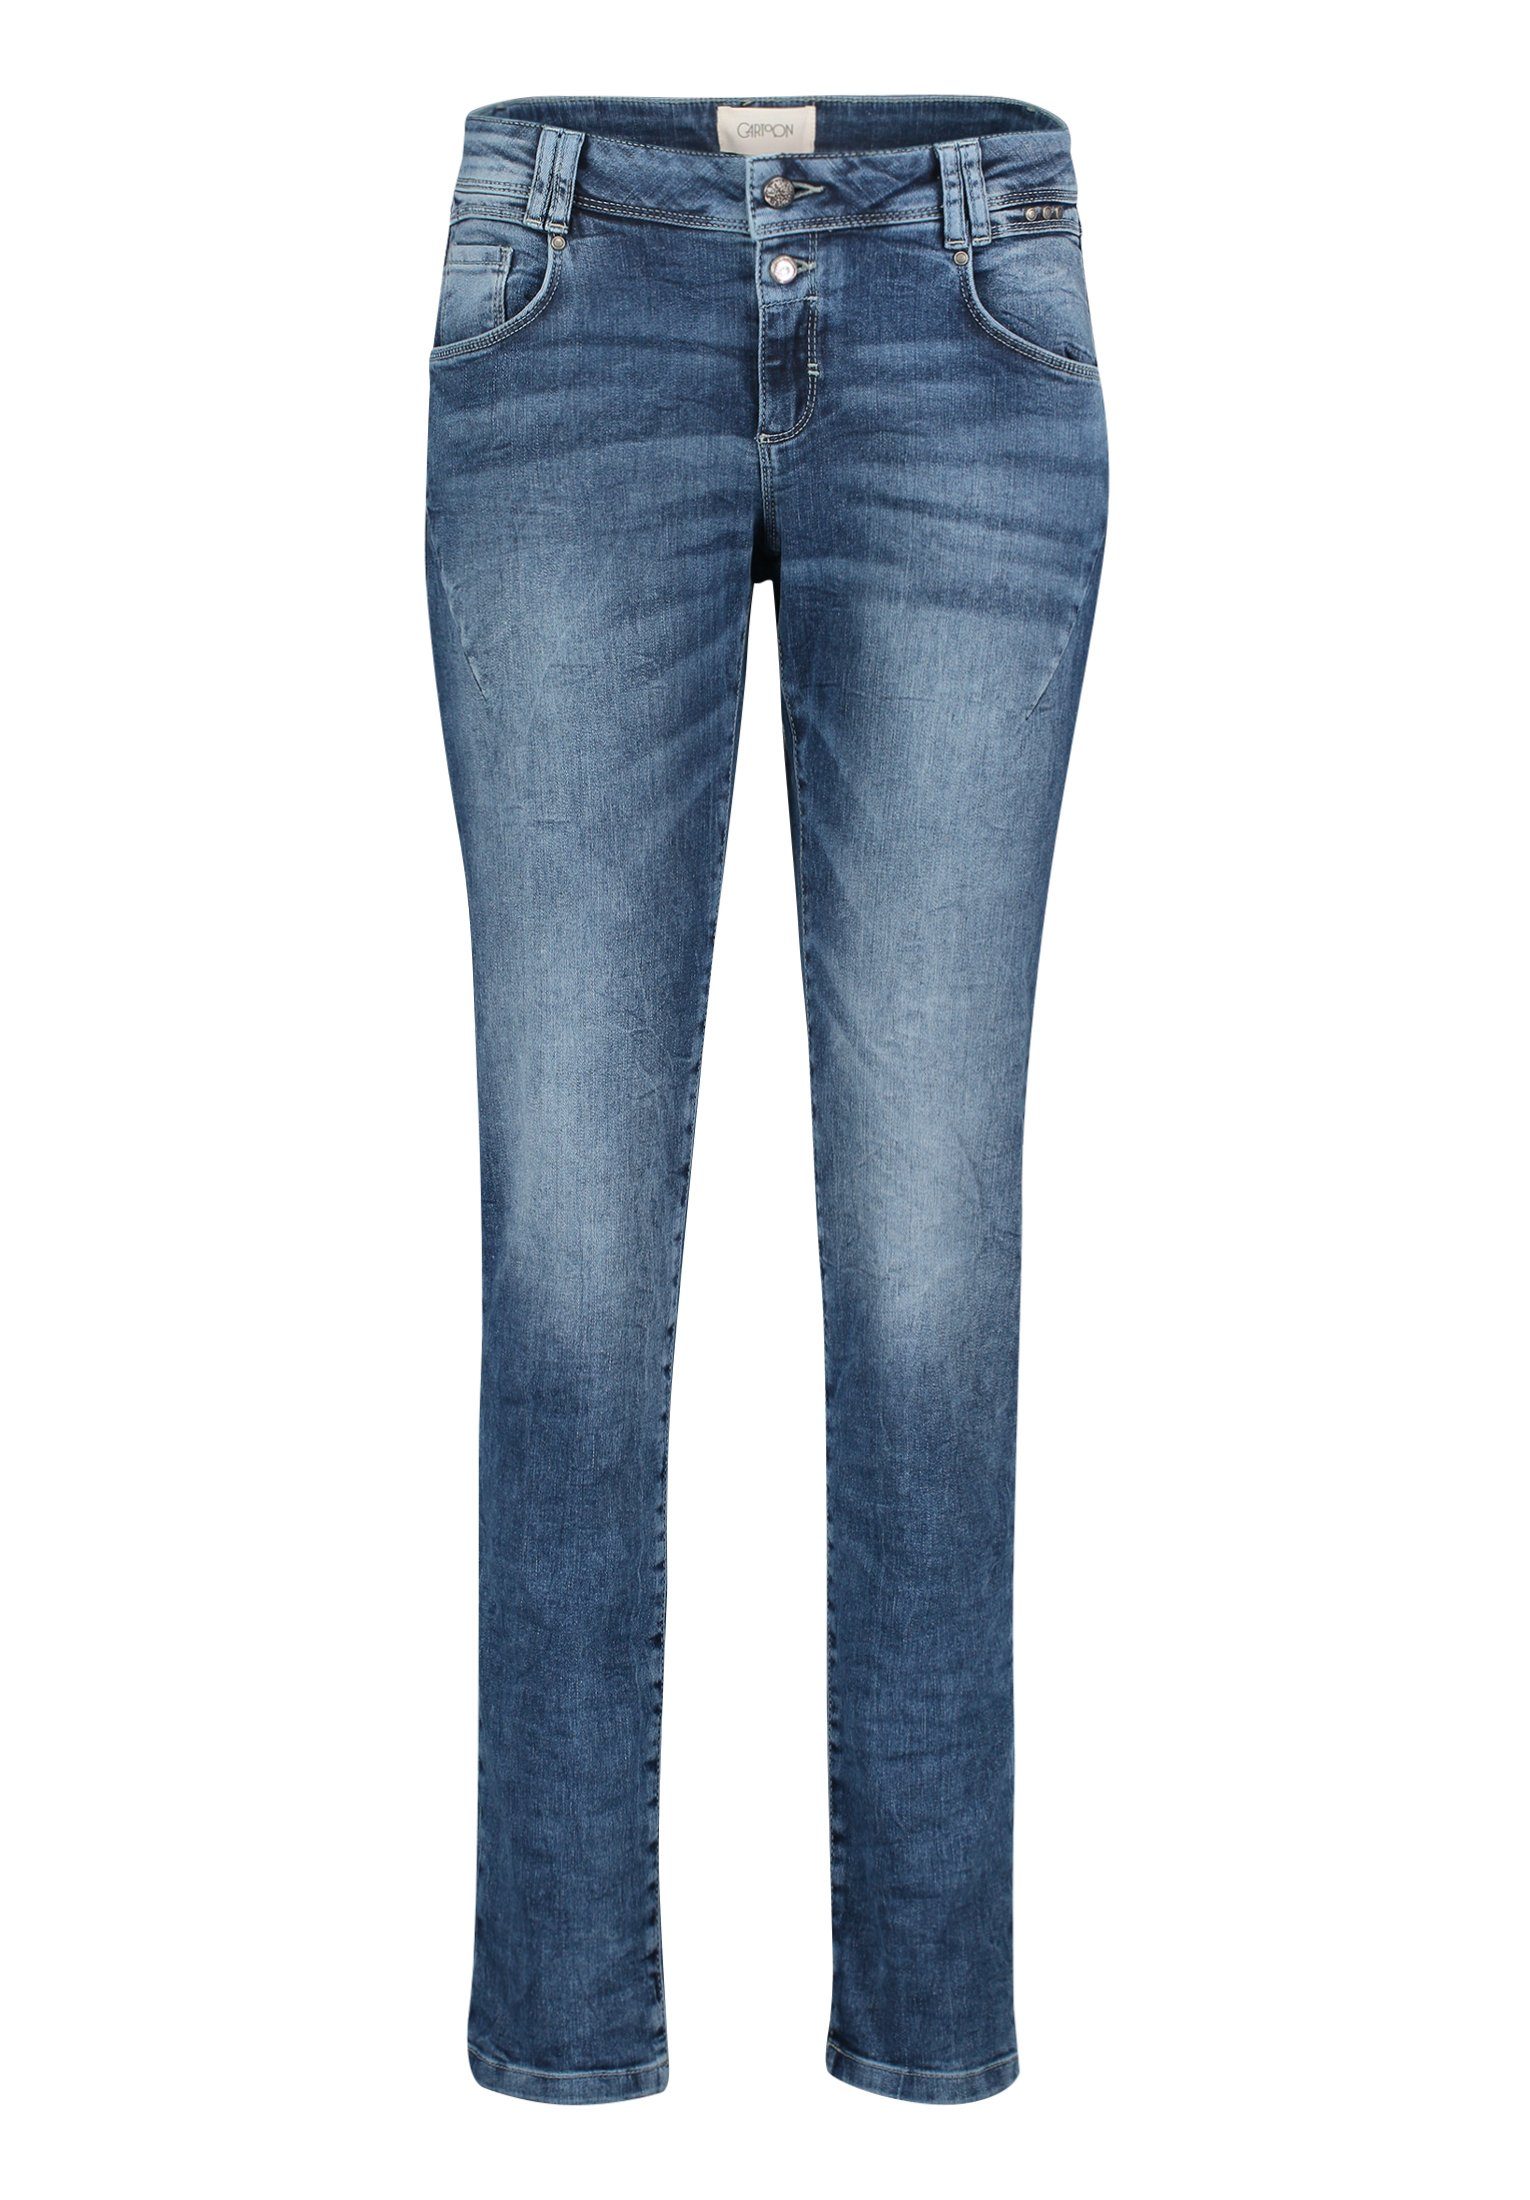 Bekleidung Jeans Cartoon Regular-fit-Jeans mit Reißverschluss